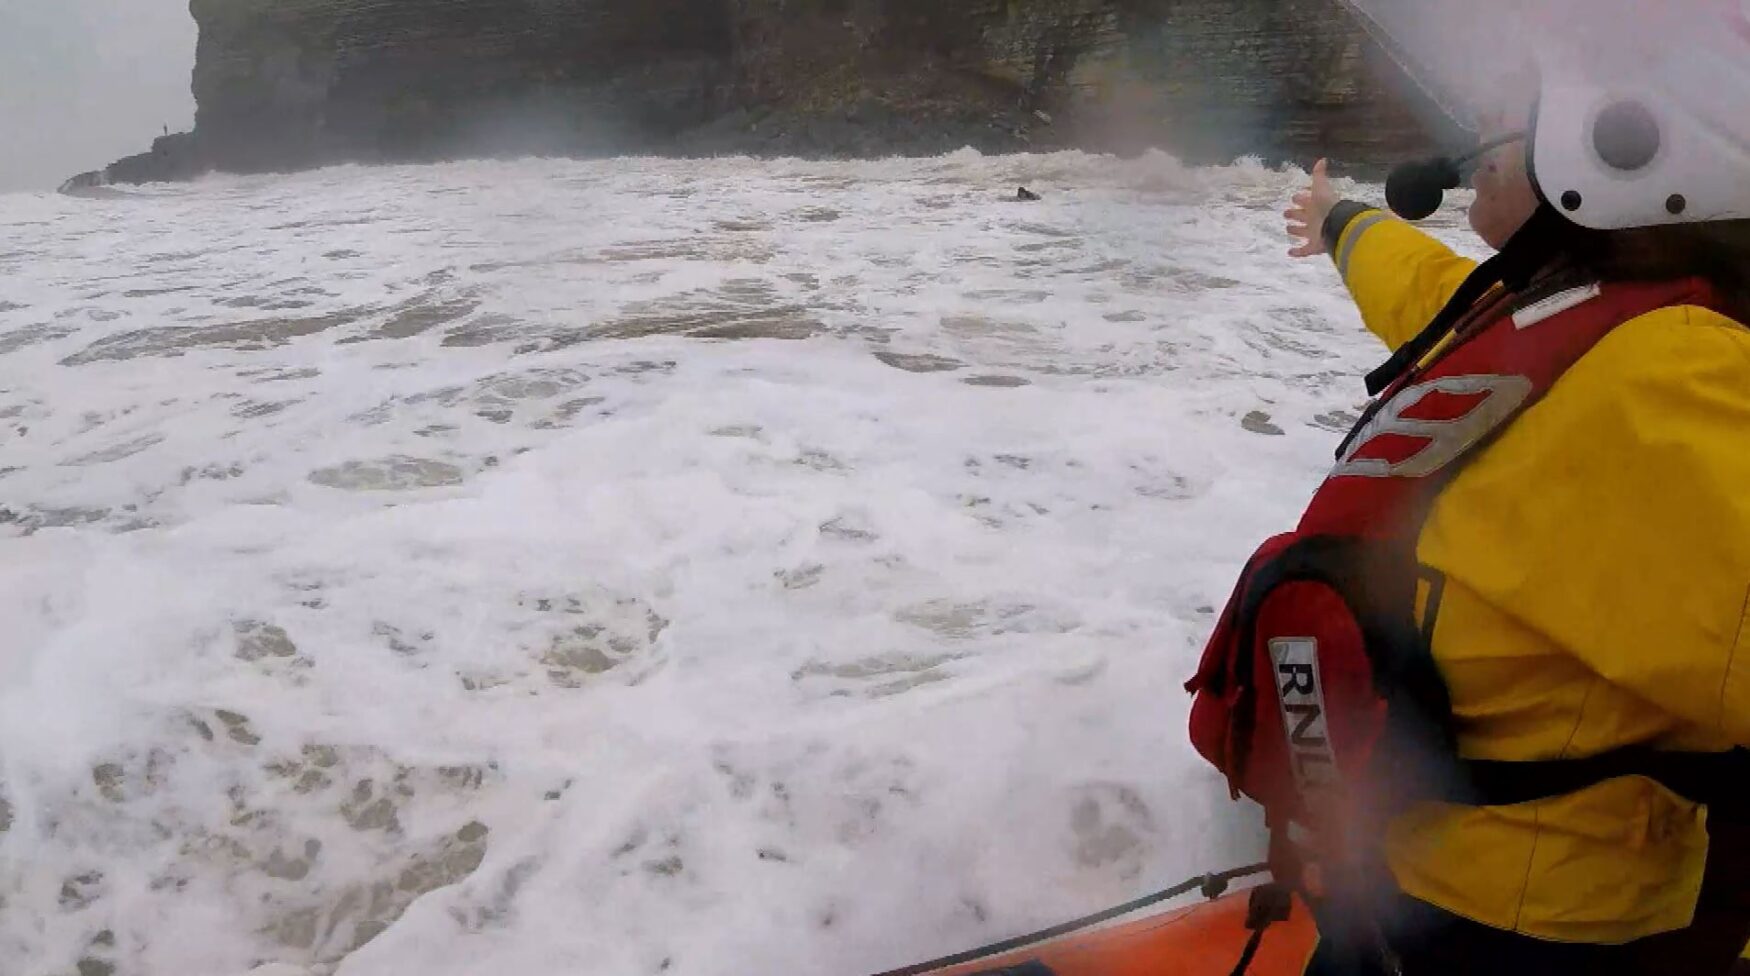 Surfer Recalls Dramatic Rescue By Rnli In New Documentary Porthcawl Rnli 5980